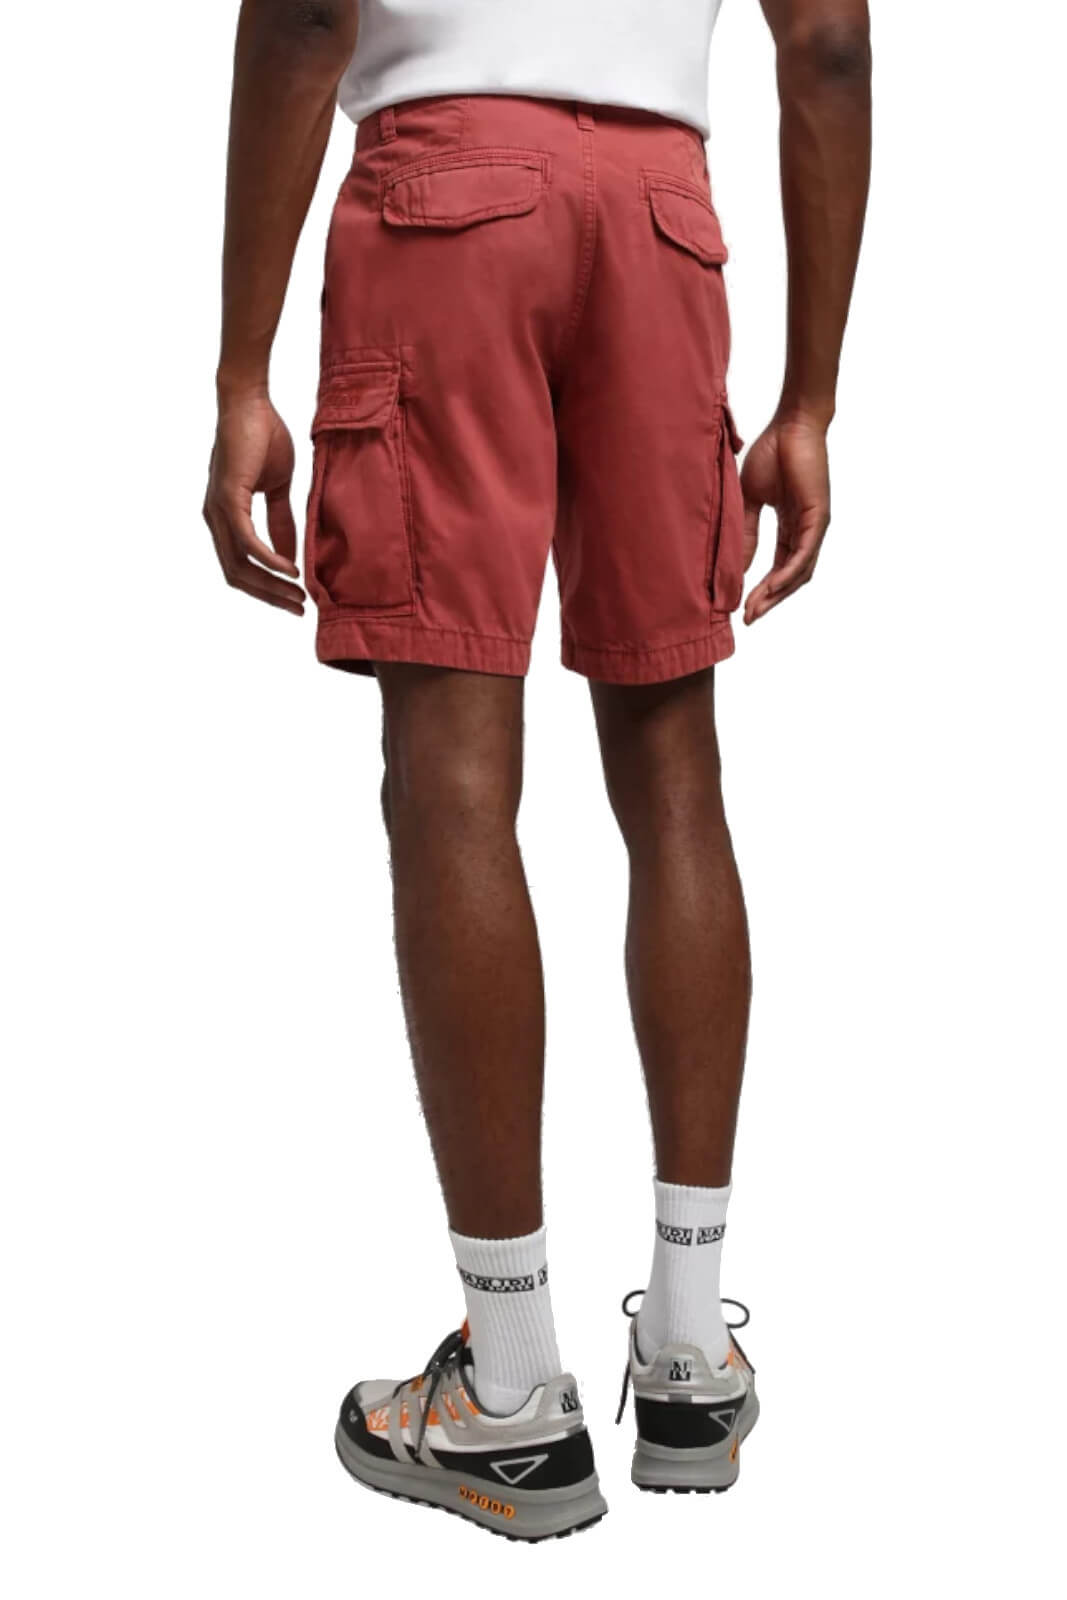 Napapijri Nus men's bermuda shorts with large pockets